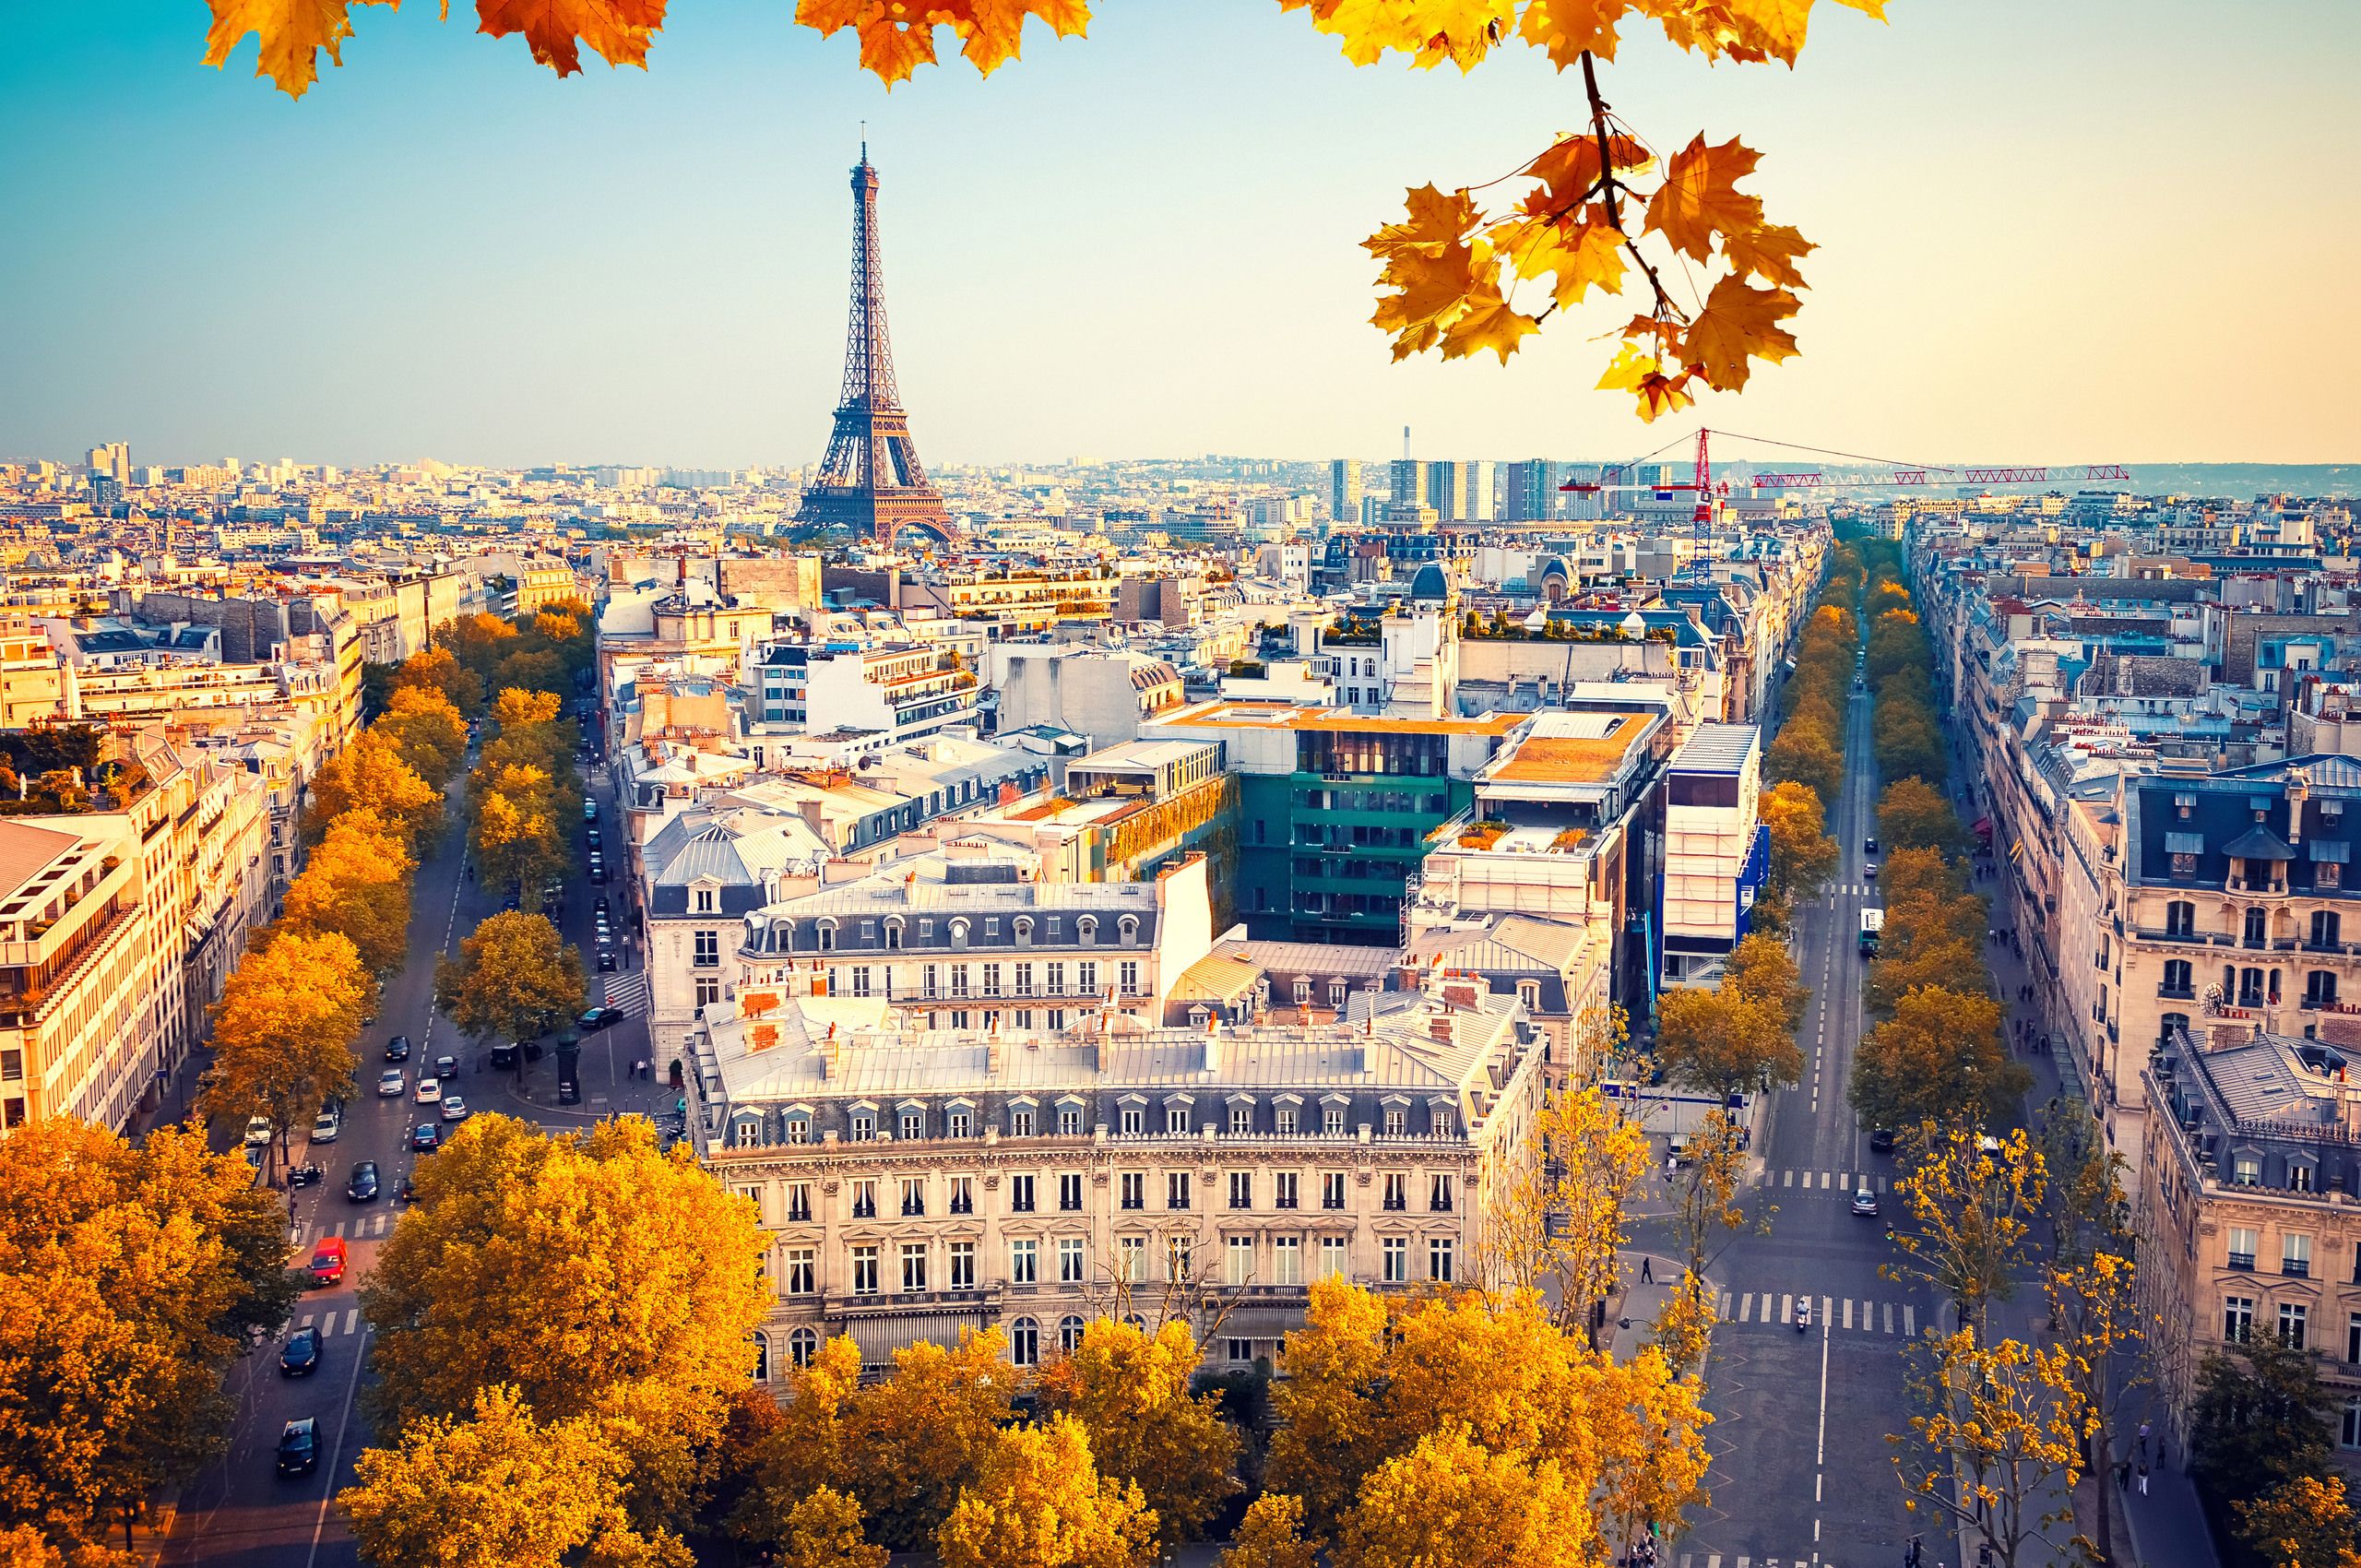 Eiffel Tower Paris City Autumn 4k 5k Chromebook Pixel HD 4k Wallpaper, Image, Background, Photo and Picture